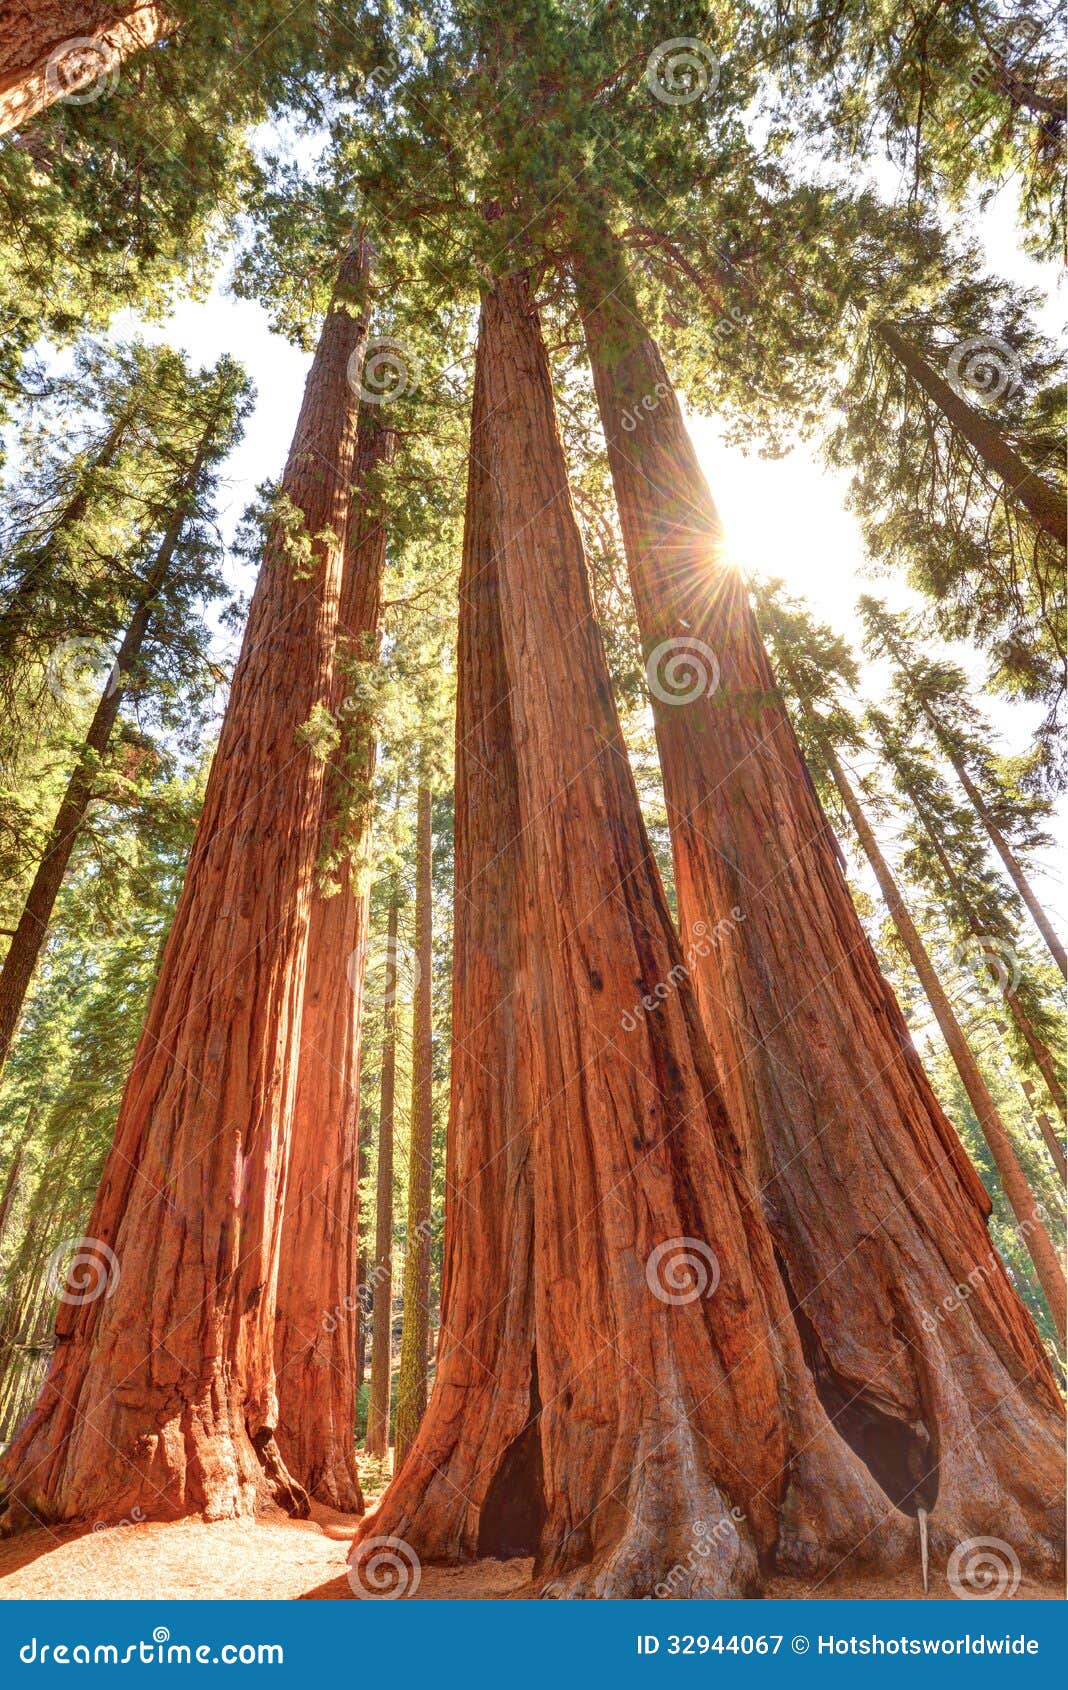 magnificent giant sequoia trees, sequoia national park, california